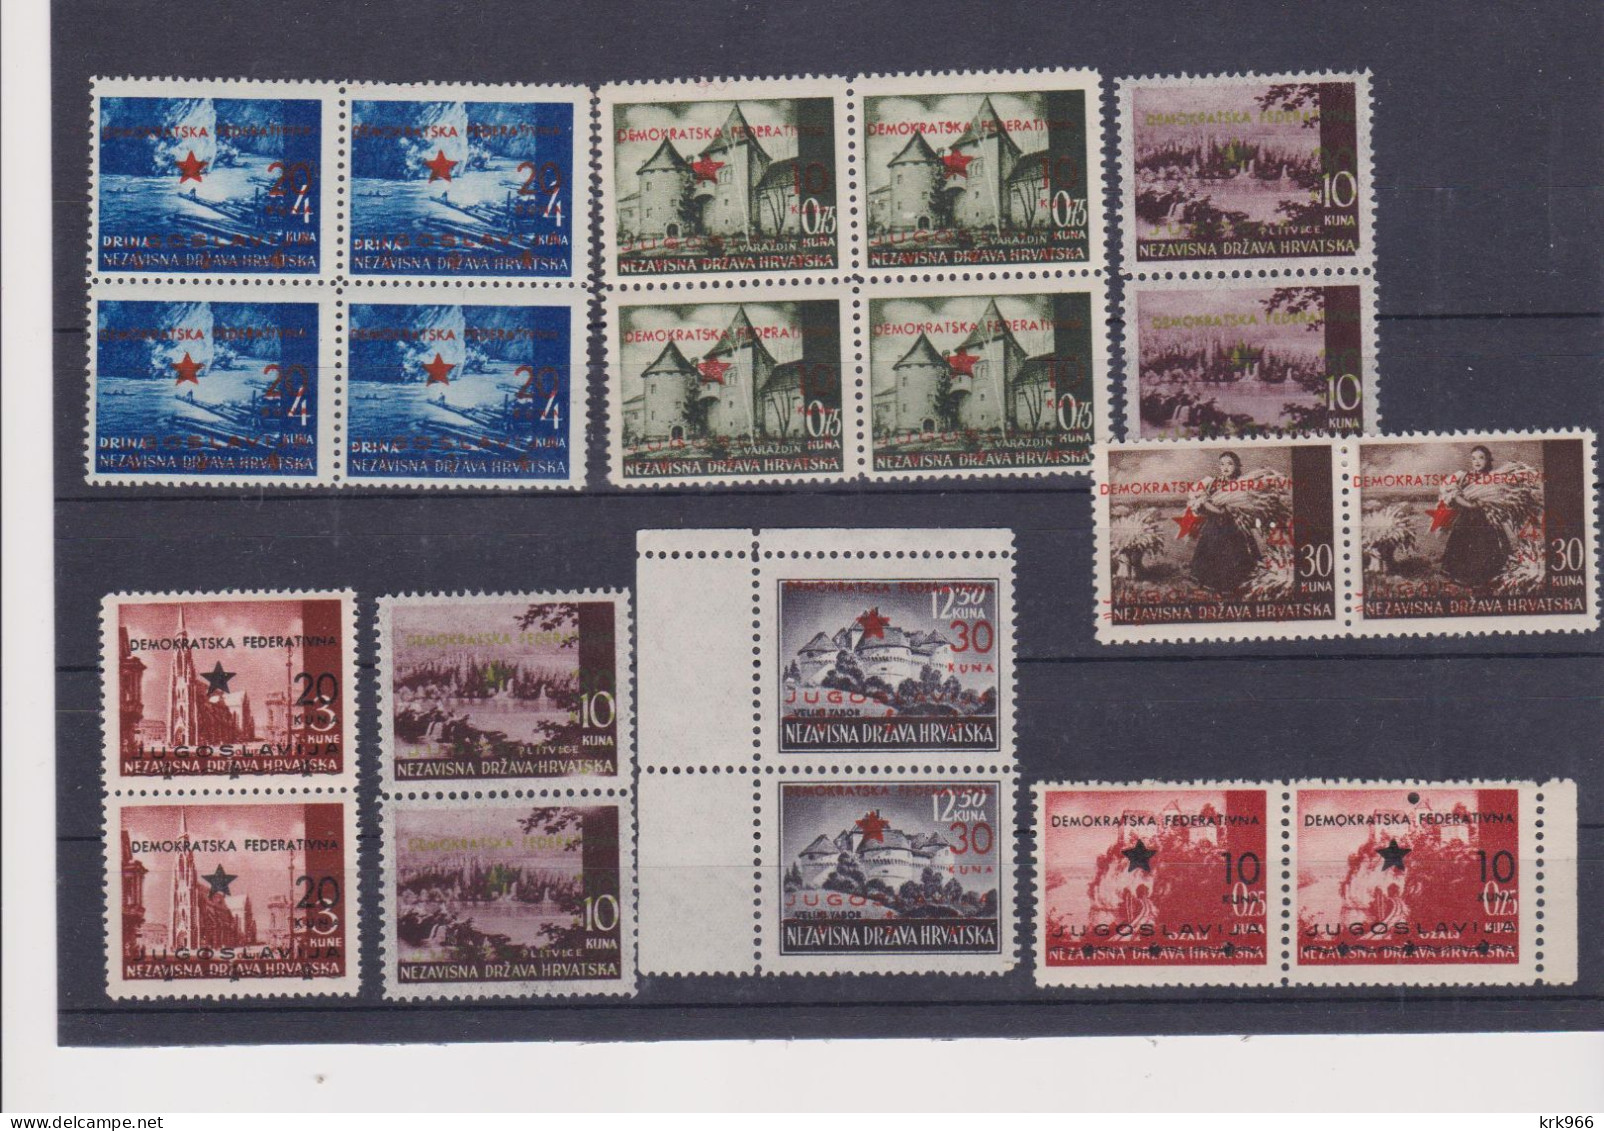 YUGOSLAVIA,1945 CROATIA SPLIT ISSUE Stamps Lot MNH - Ongebruikt